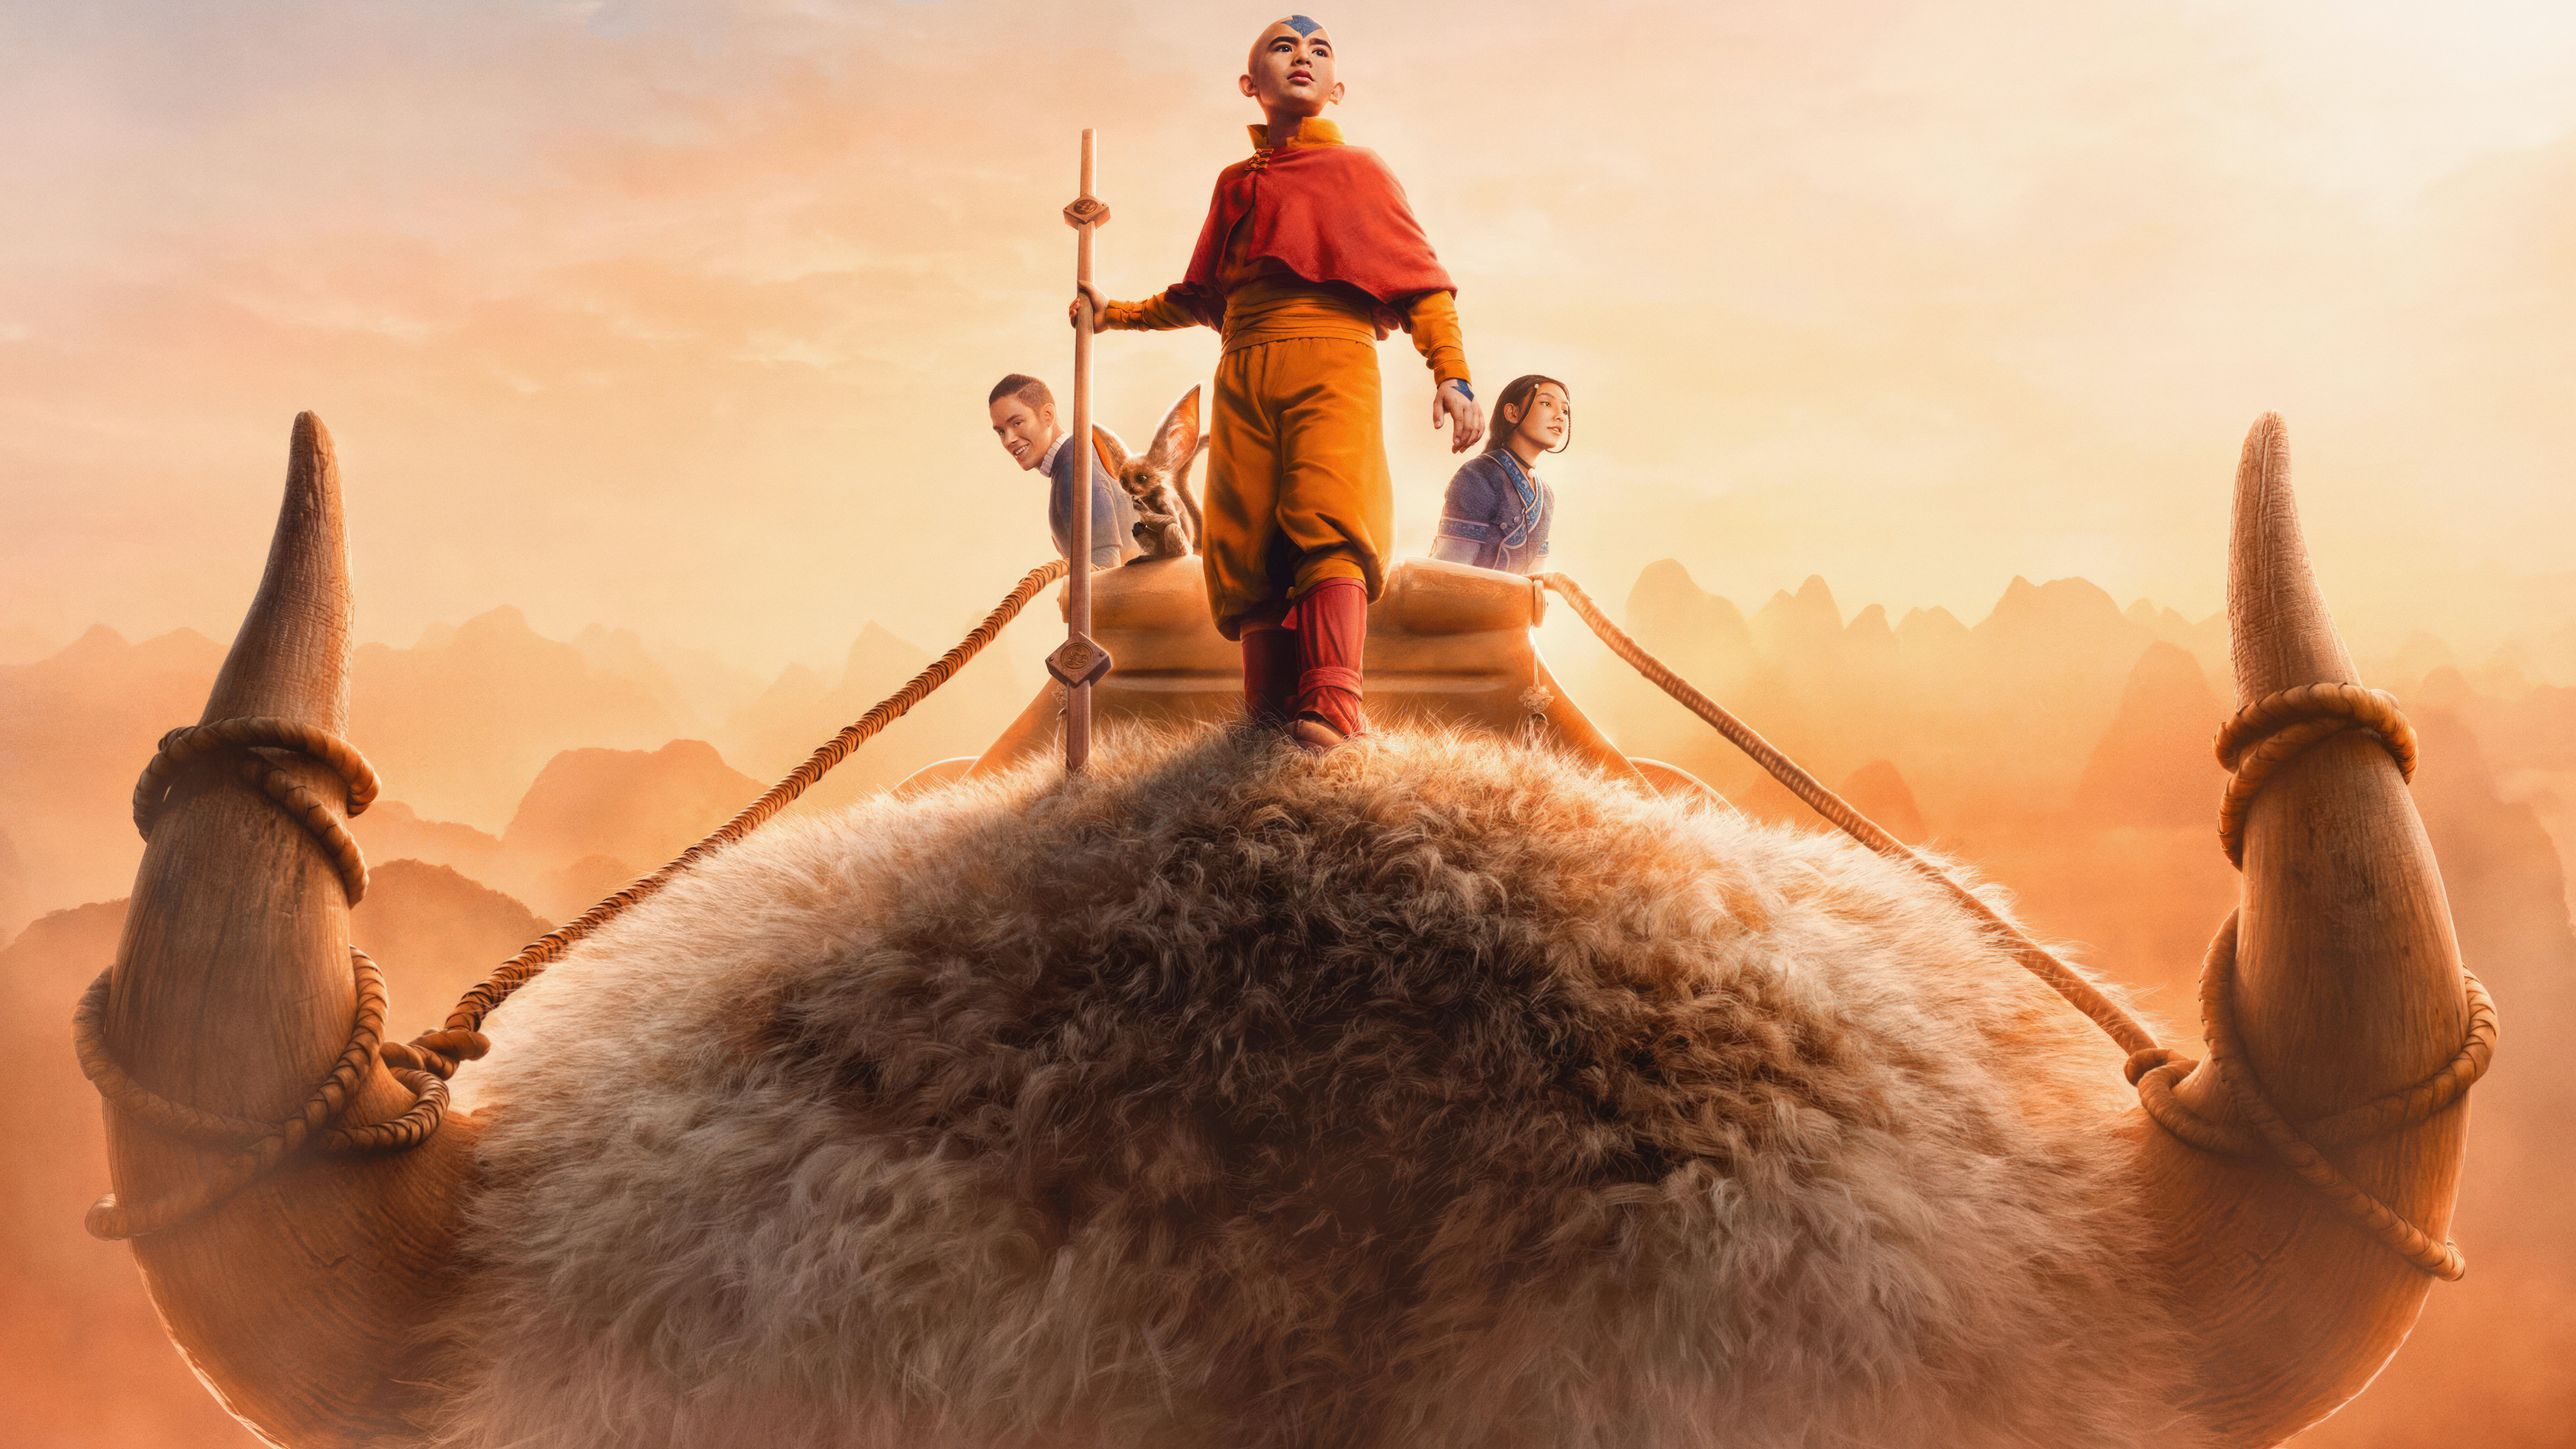 The Kings Avatar Chinese Drama Desktop Wallpapers - Wallpaper Cave